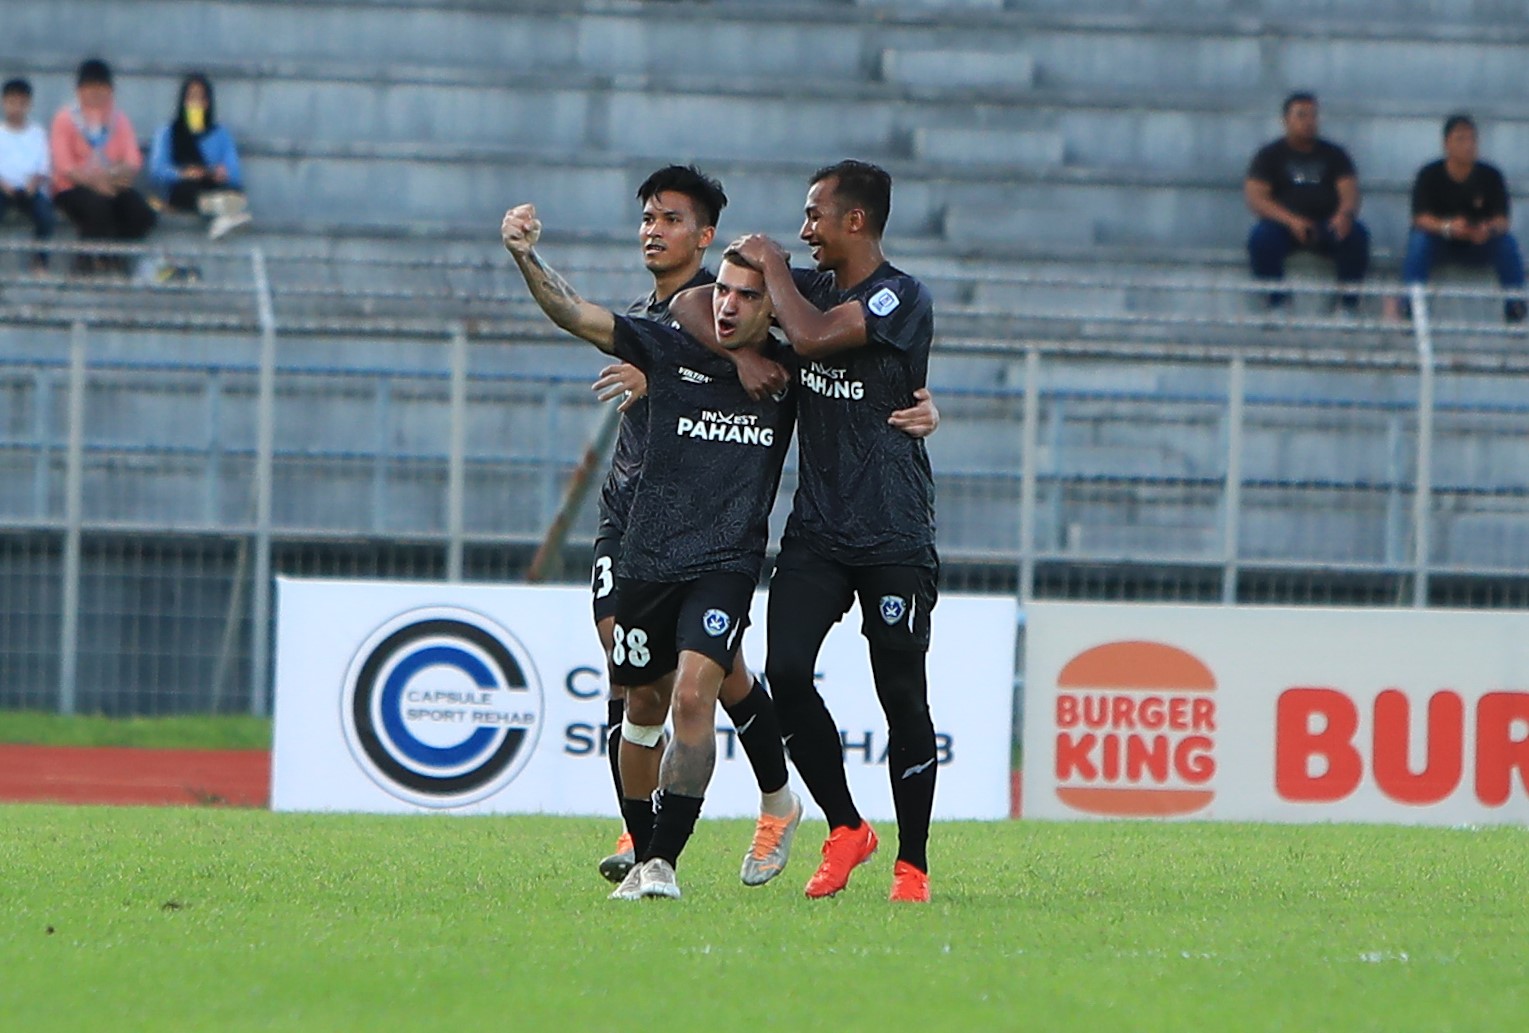 Sri Pahang's promising progress: club on track for top-three finish, says Dollah Salleh